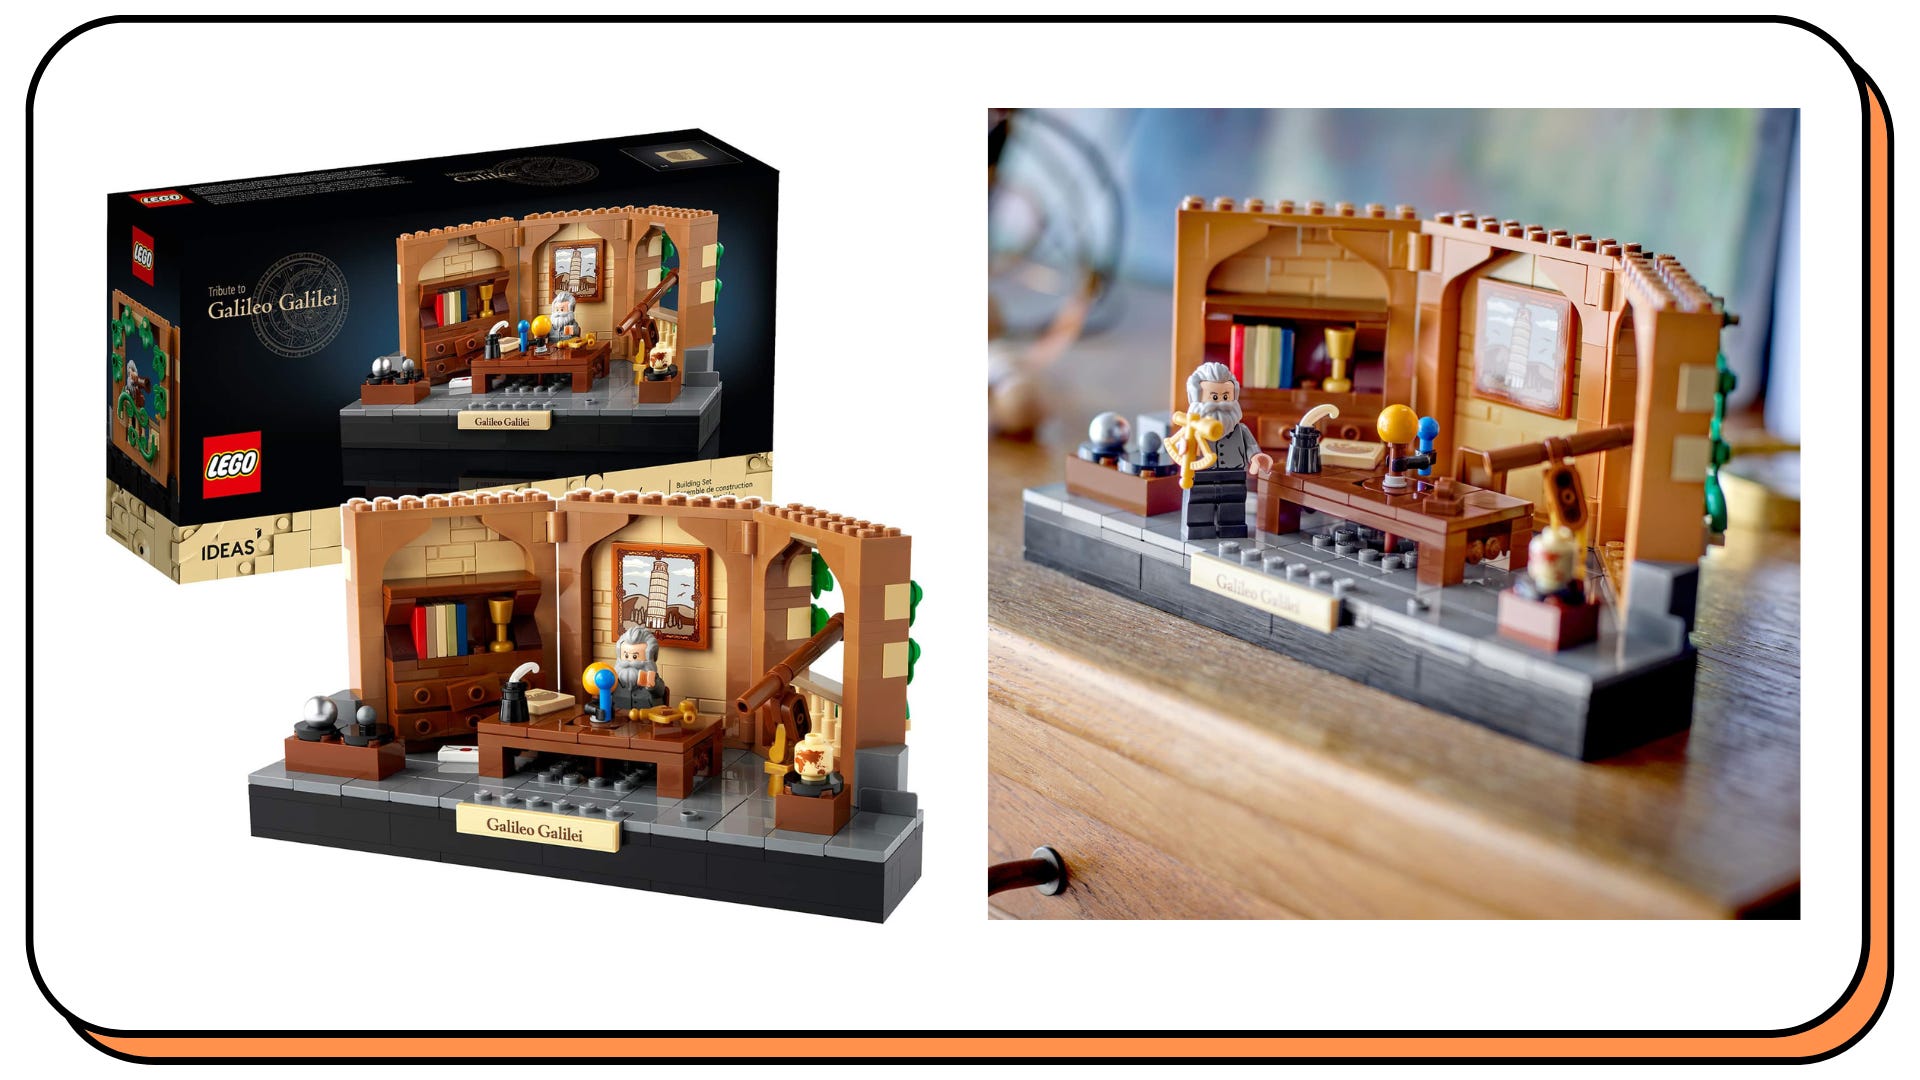 Chez LEGO : le cadeau Harry Potter 40452 Hogwarts Gryffindor Dorms